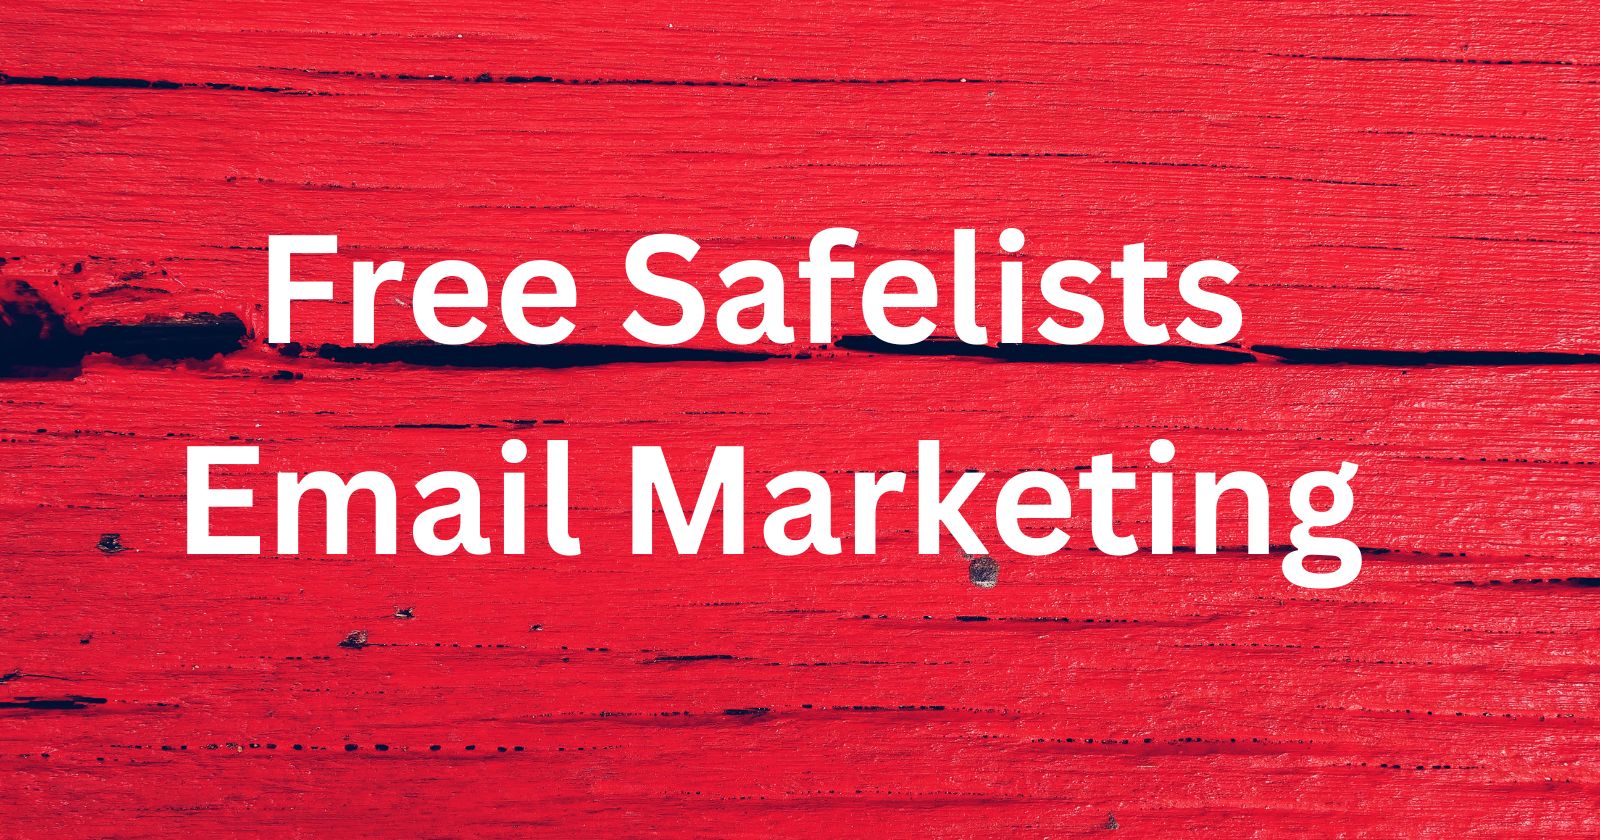 Free Safelists Email Marketing